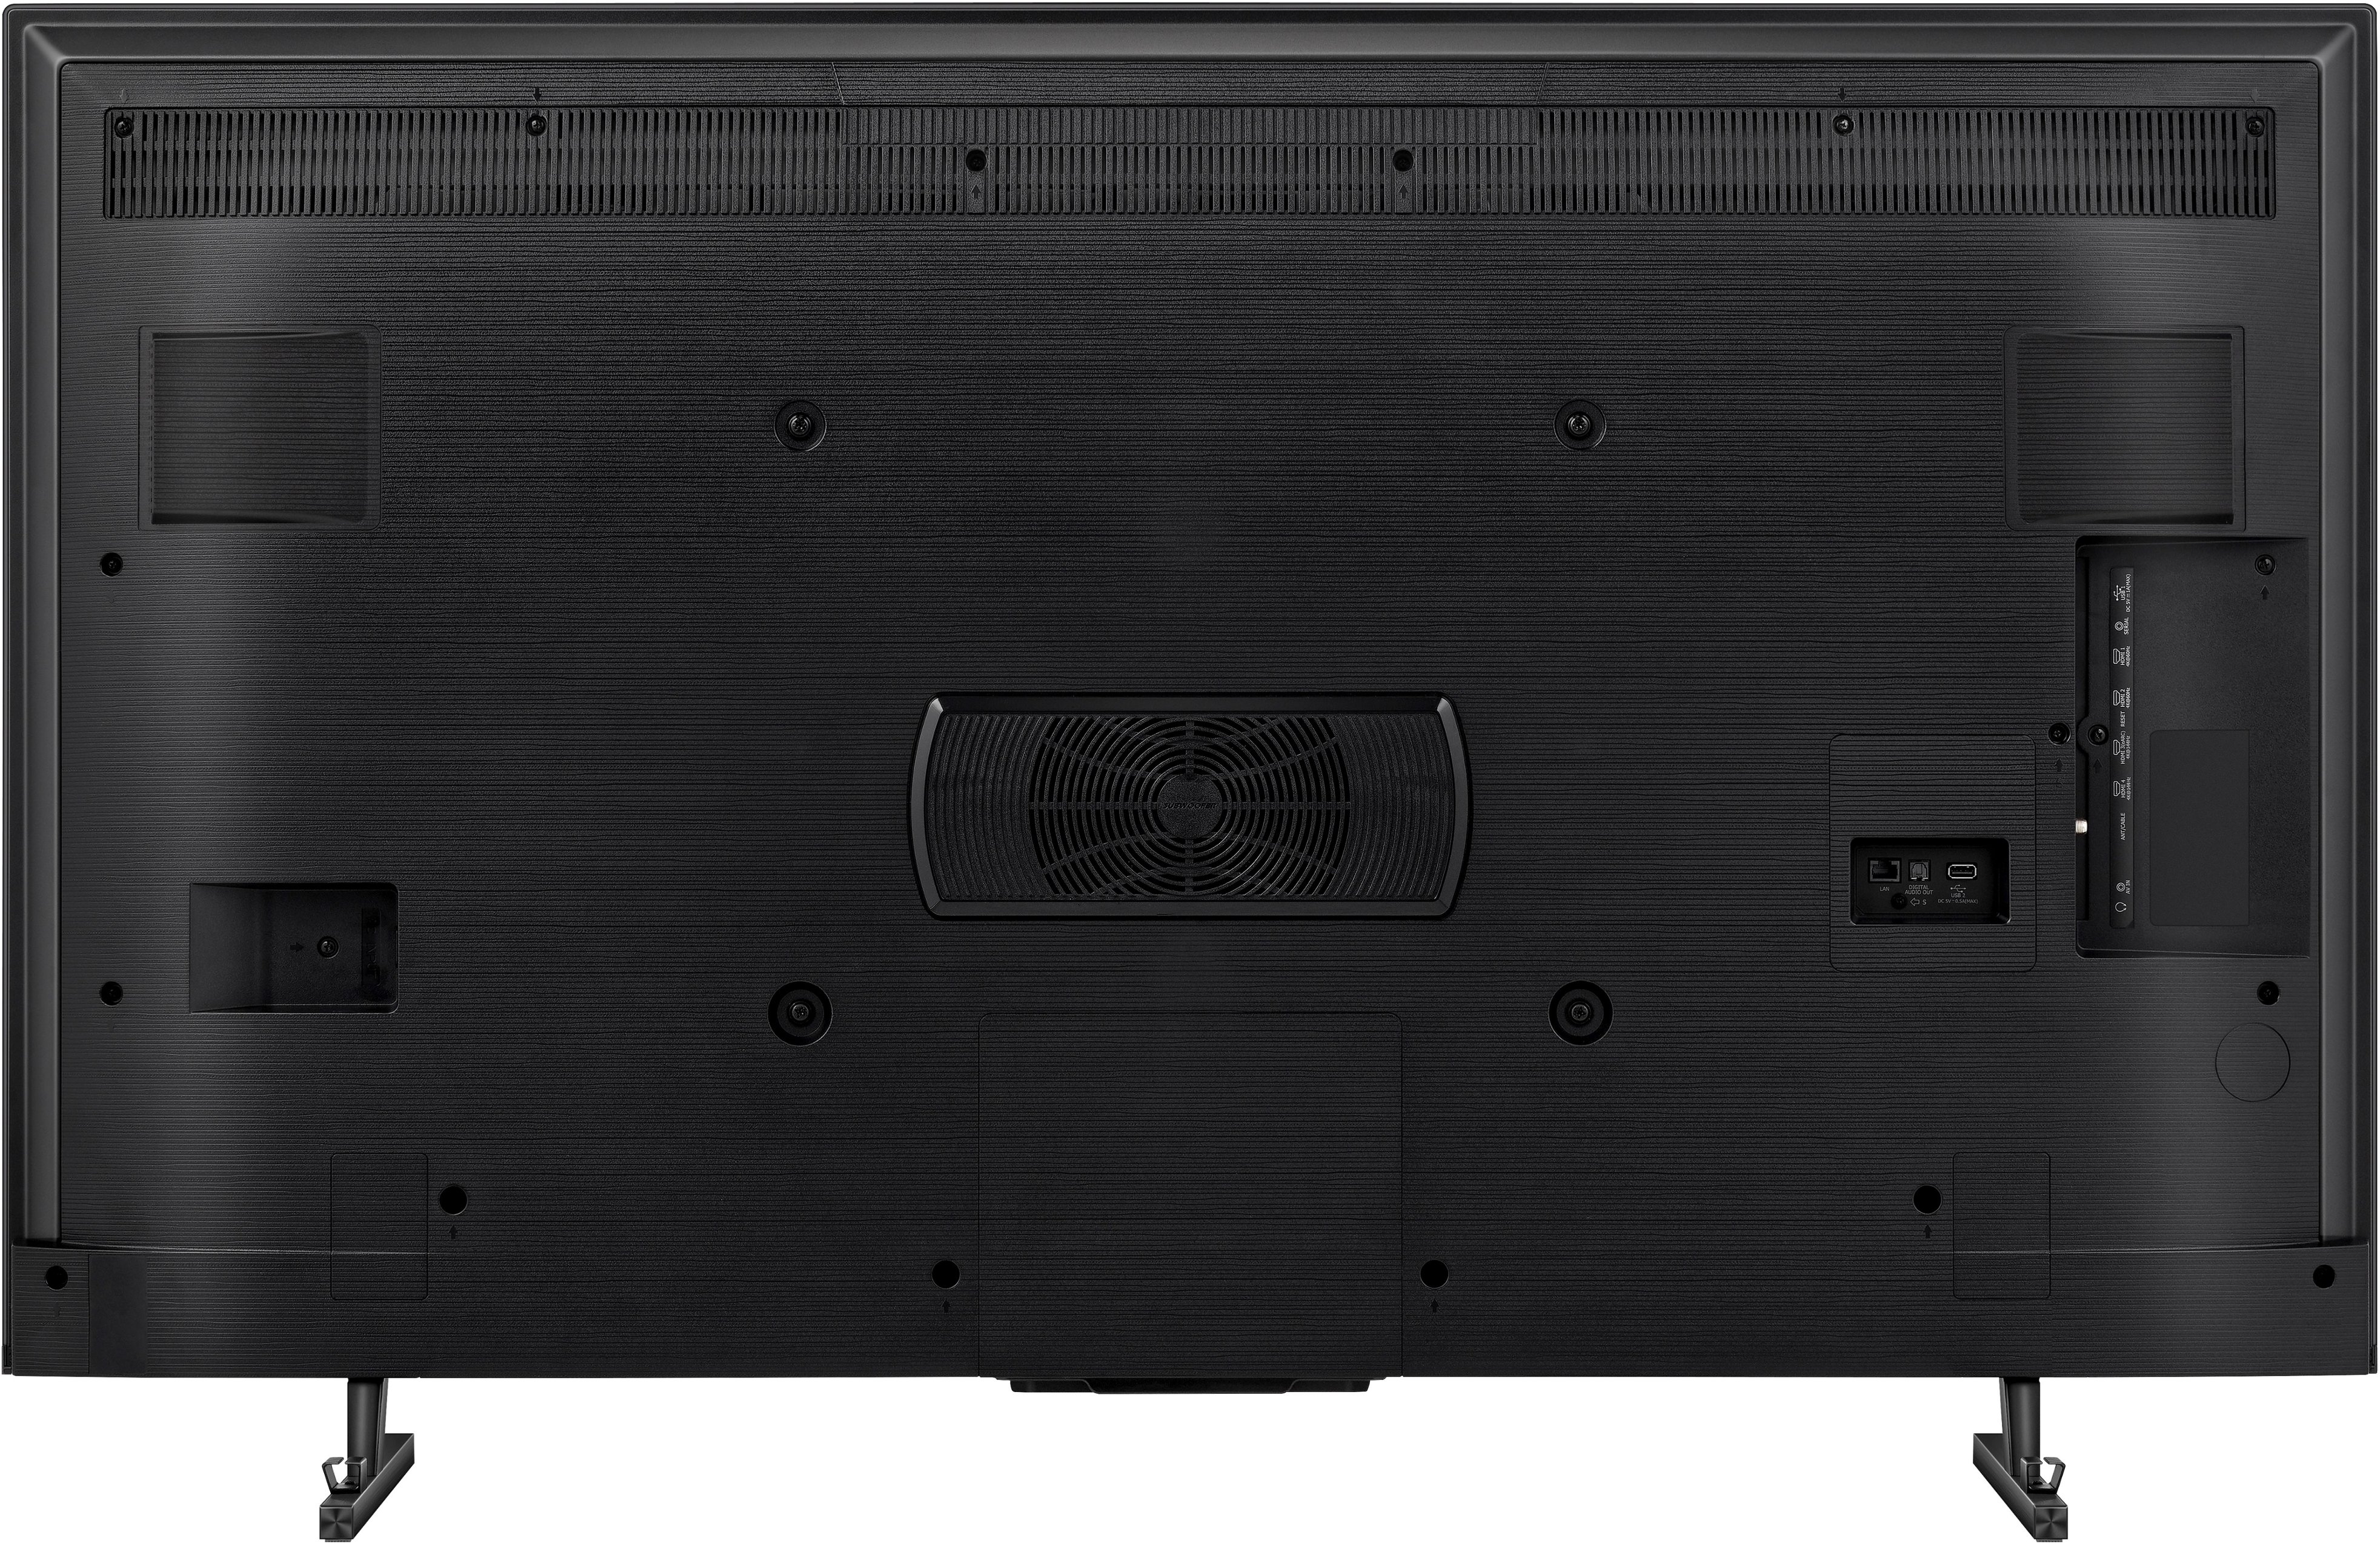  Hisense 65-Inch Class U8 Series Mini-LED ULED 4K UHD Google  Smart TV (65U8K) - QLED, Native 144Hz, 1500-Nit, Dolby Vision IQ, Full  Array Local Dimming, Game Mode Pro, Alexa Compatibility. 